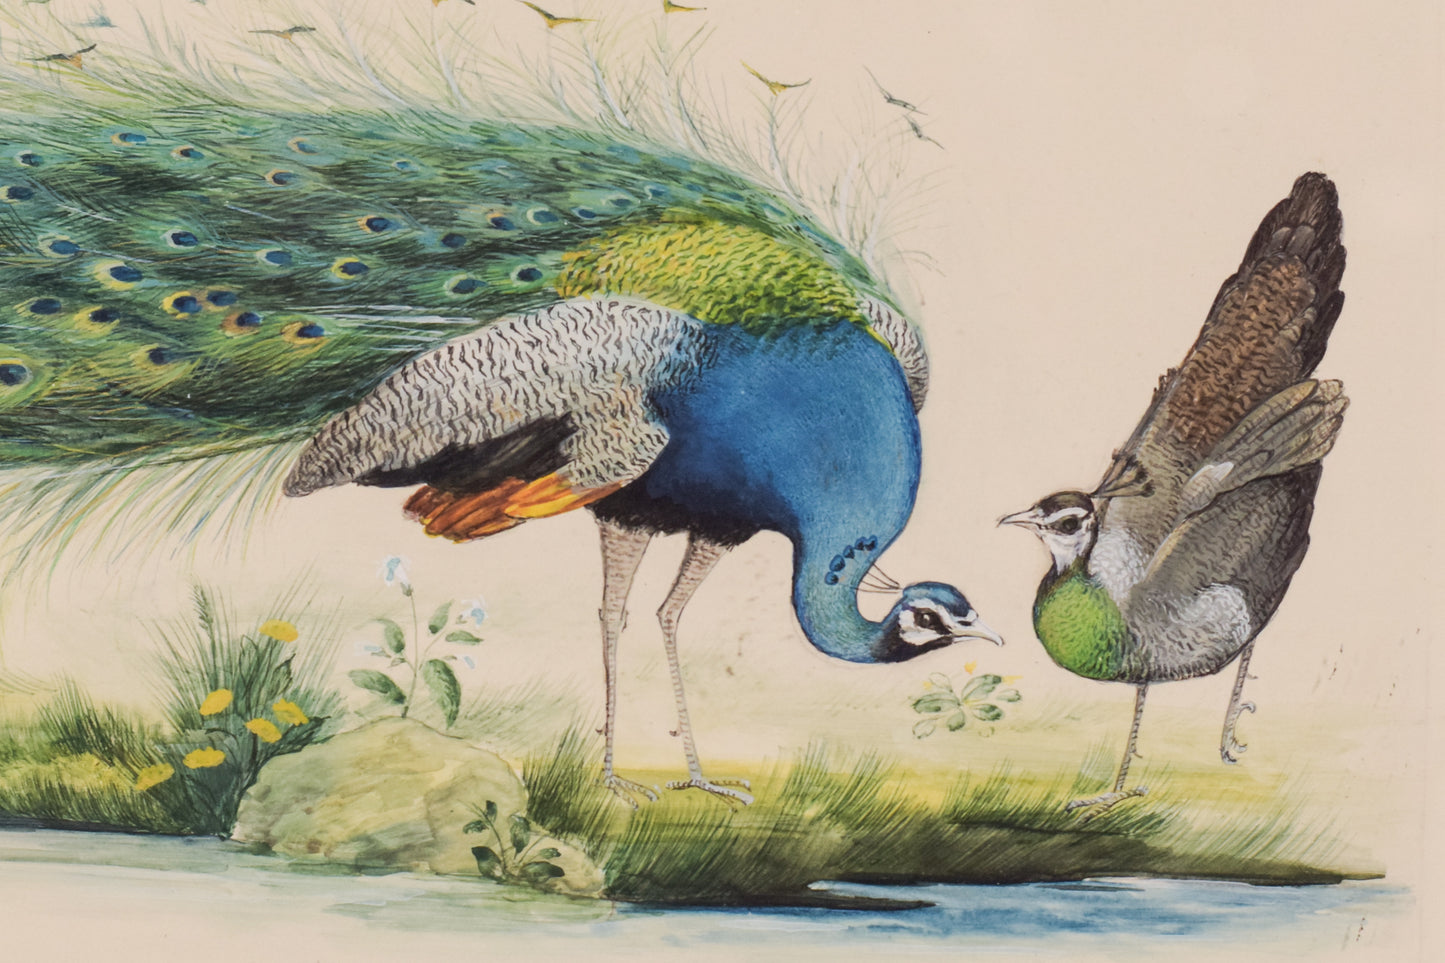 Pair of Peacock Goauches